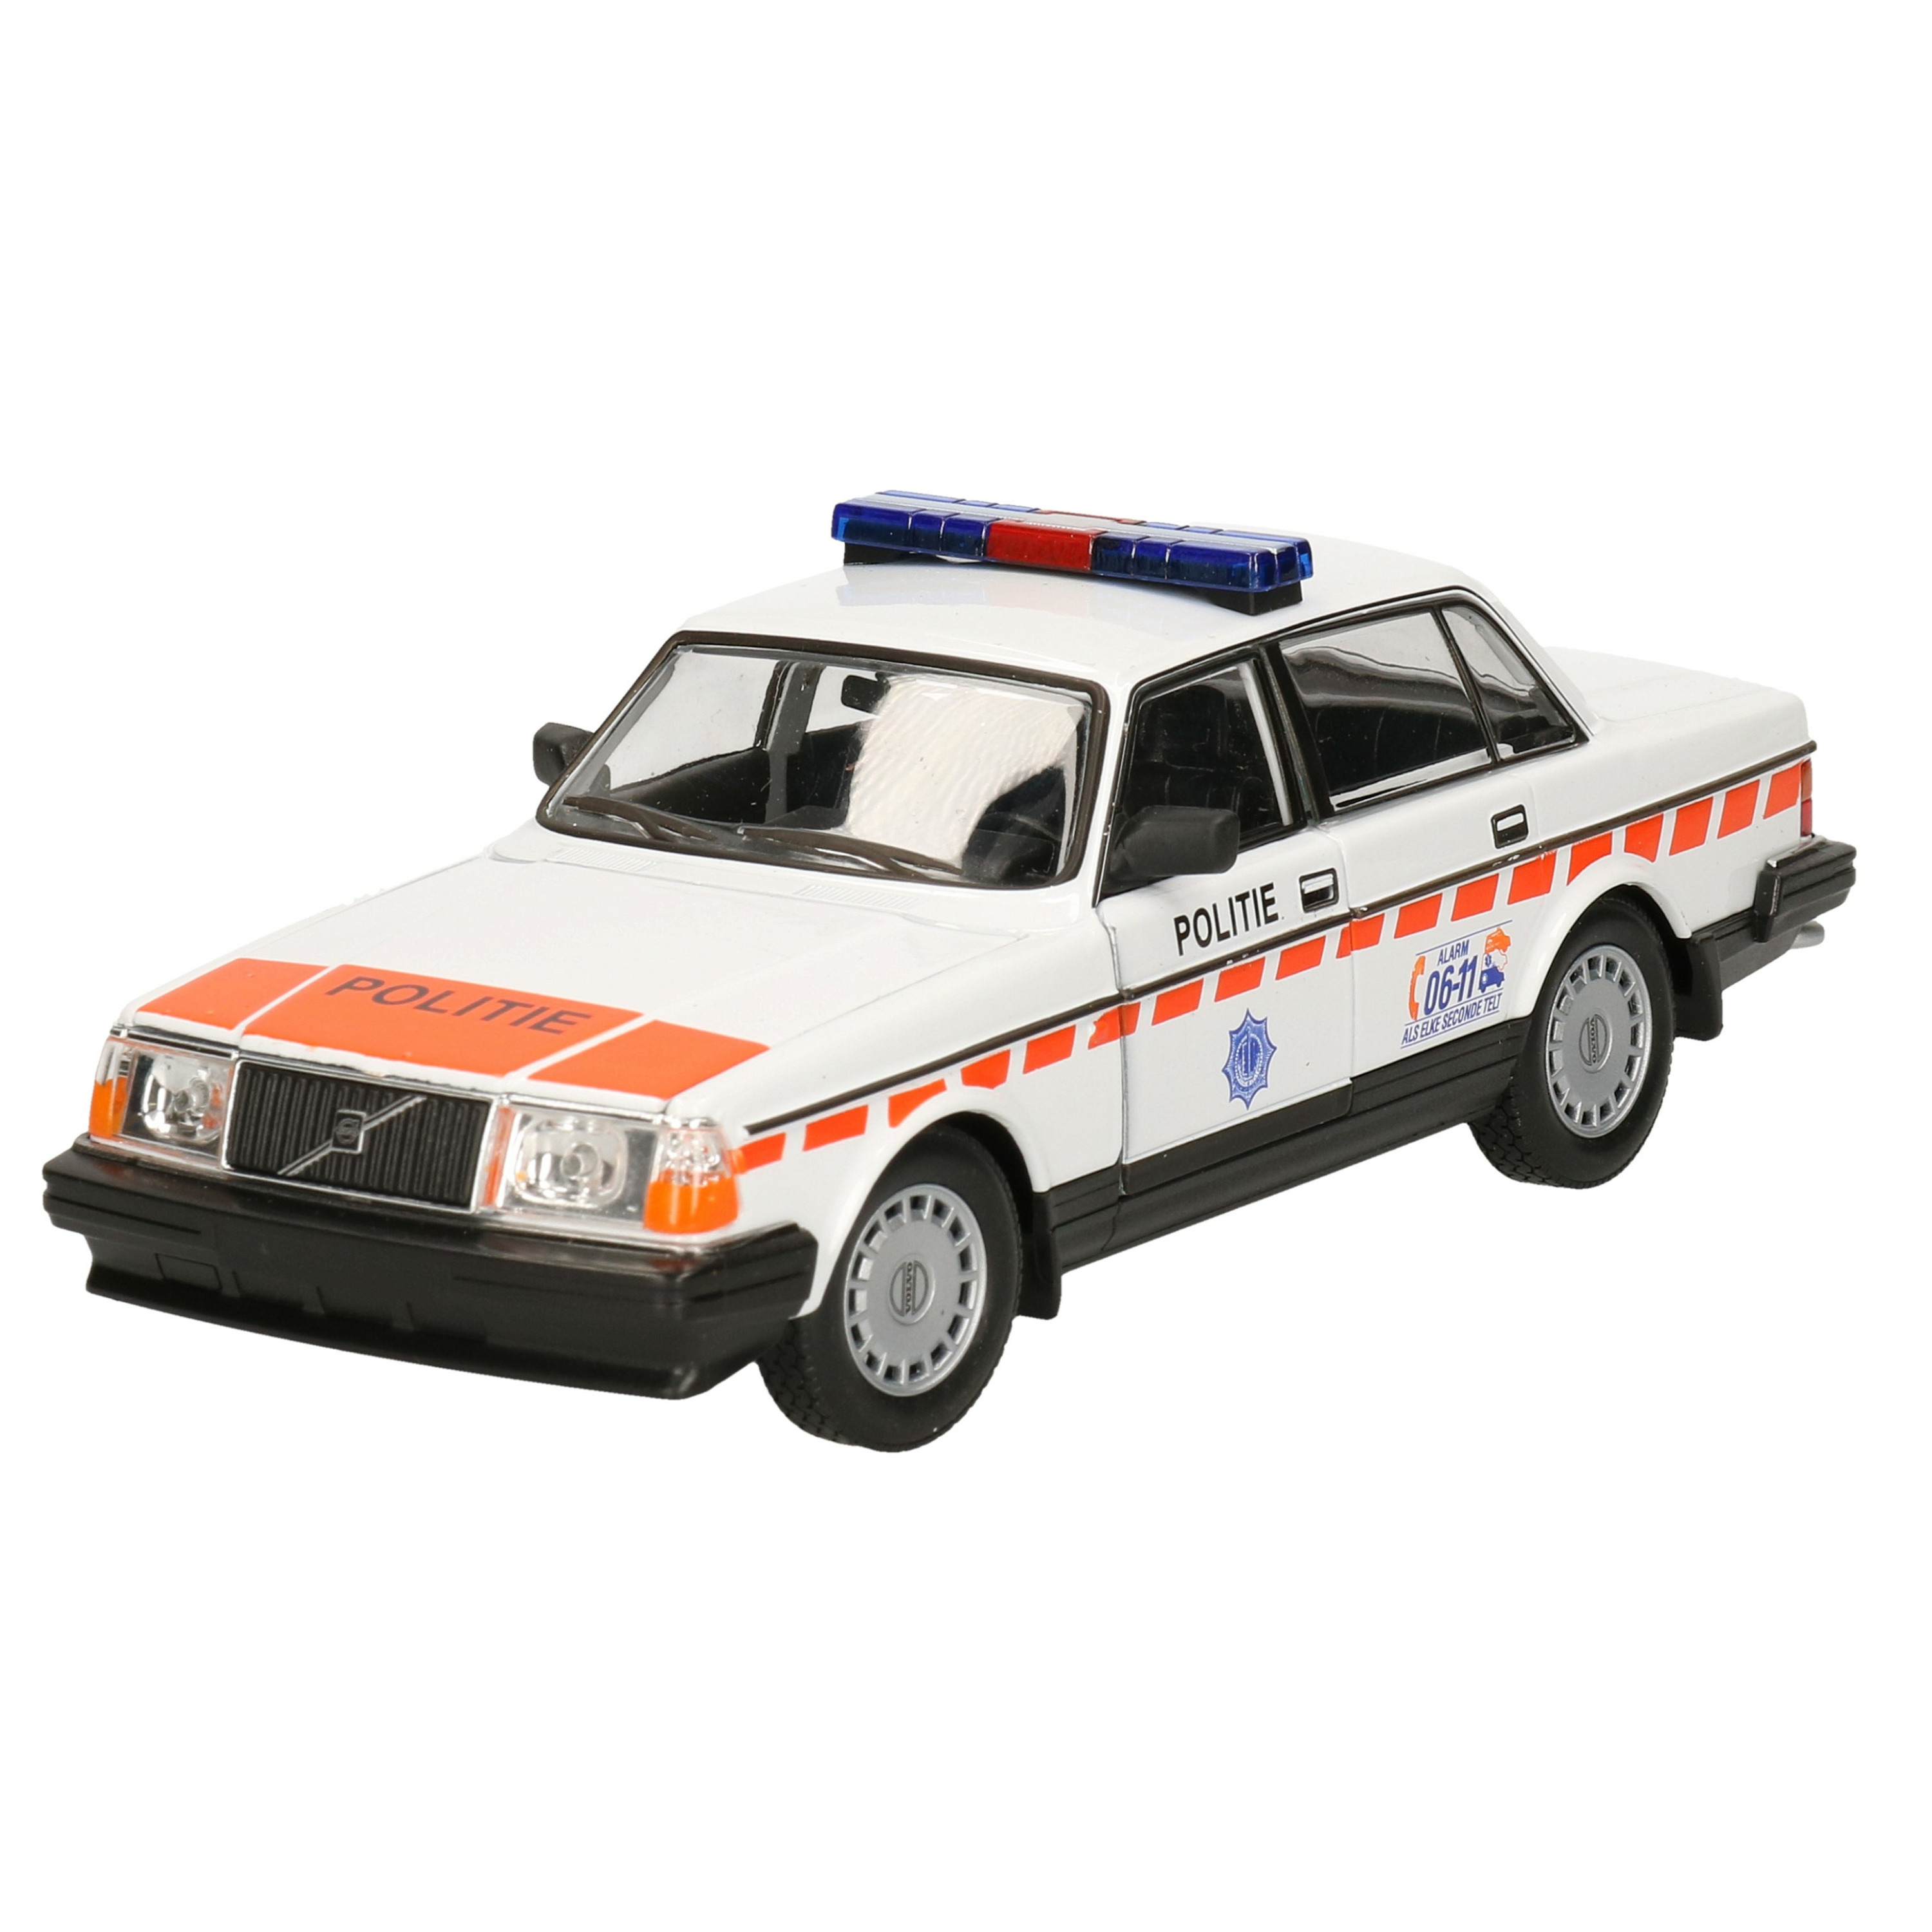 Modelauto-speelgoedauto Volvo 240GL politie 1986 schaal 1:24-20 x 7 x 6 cm